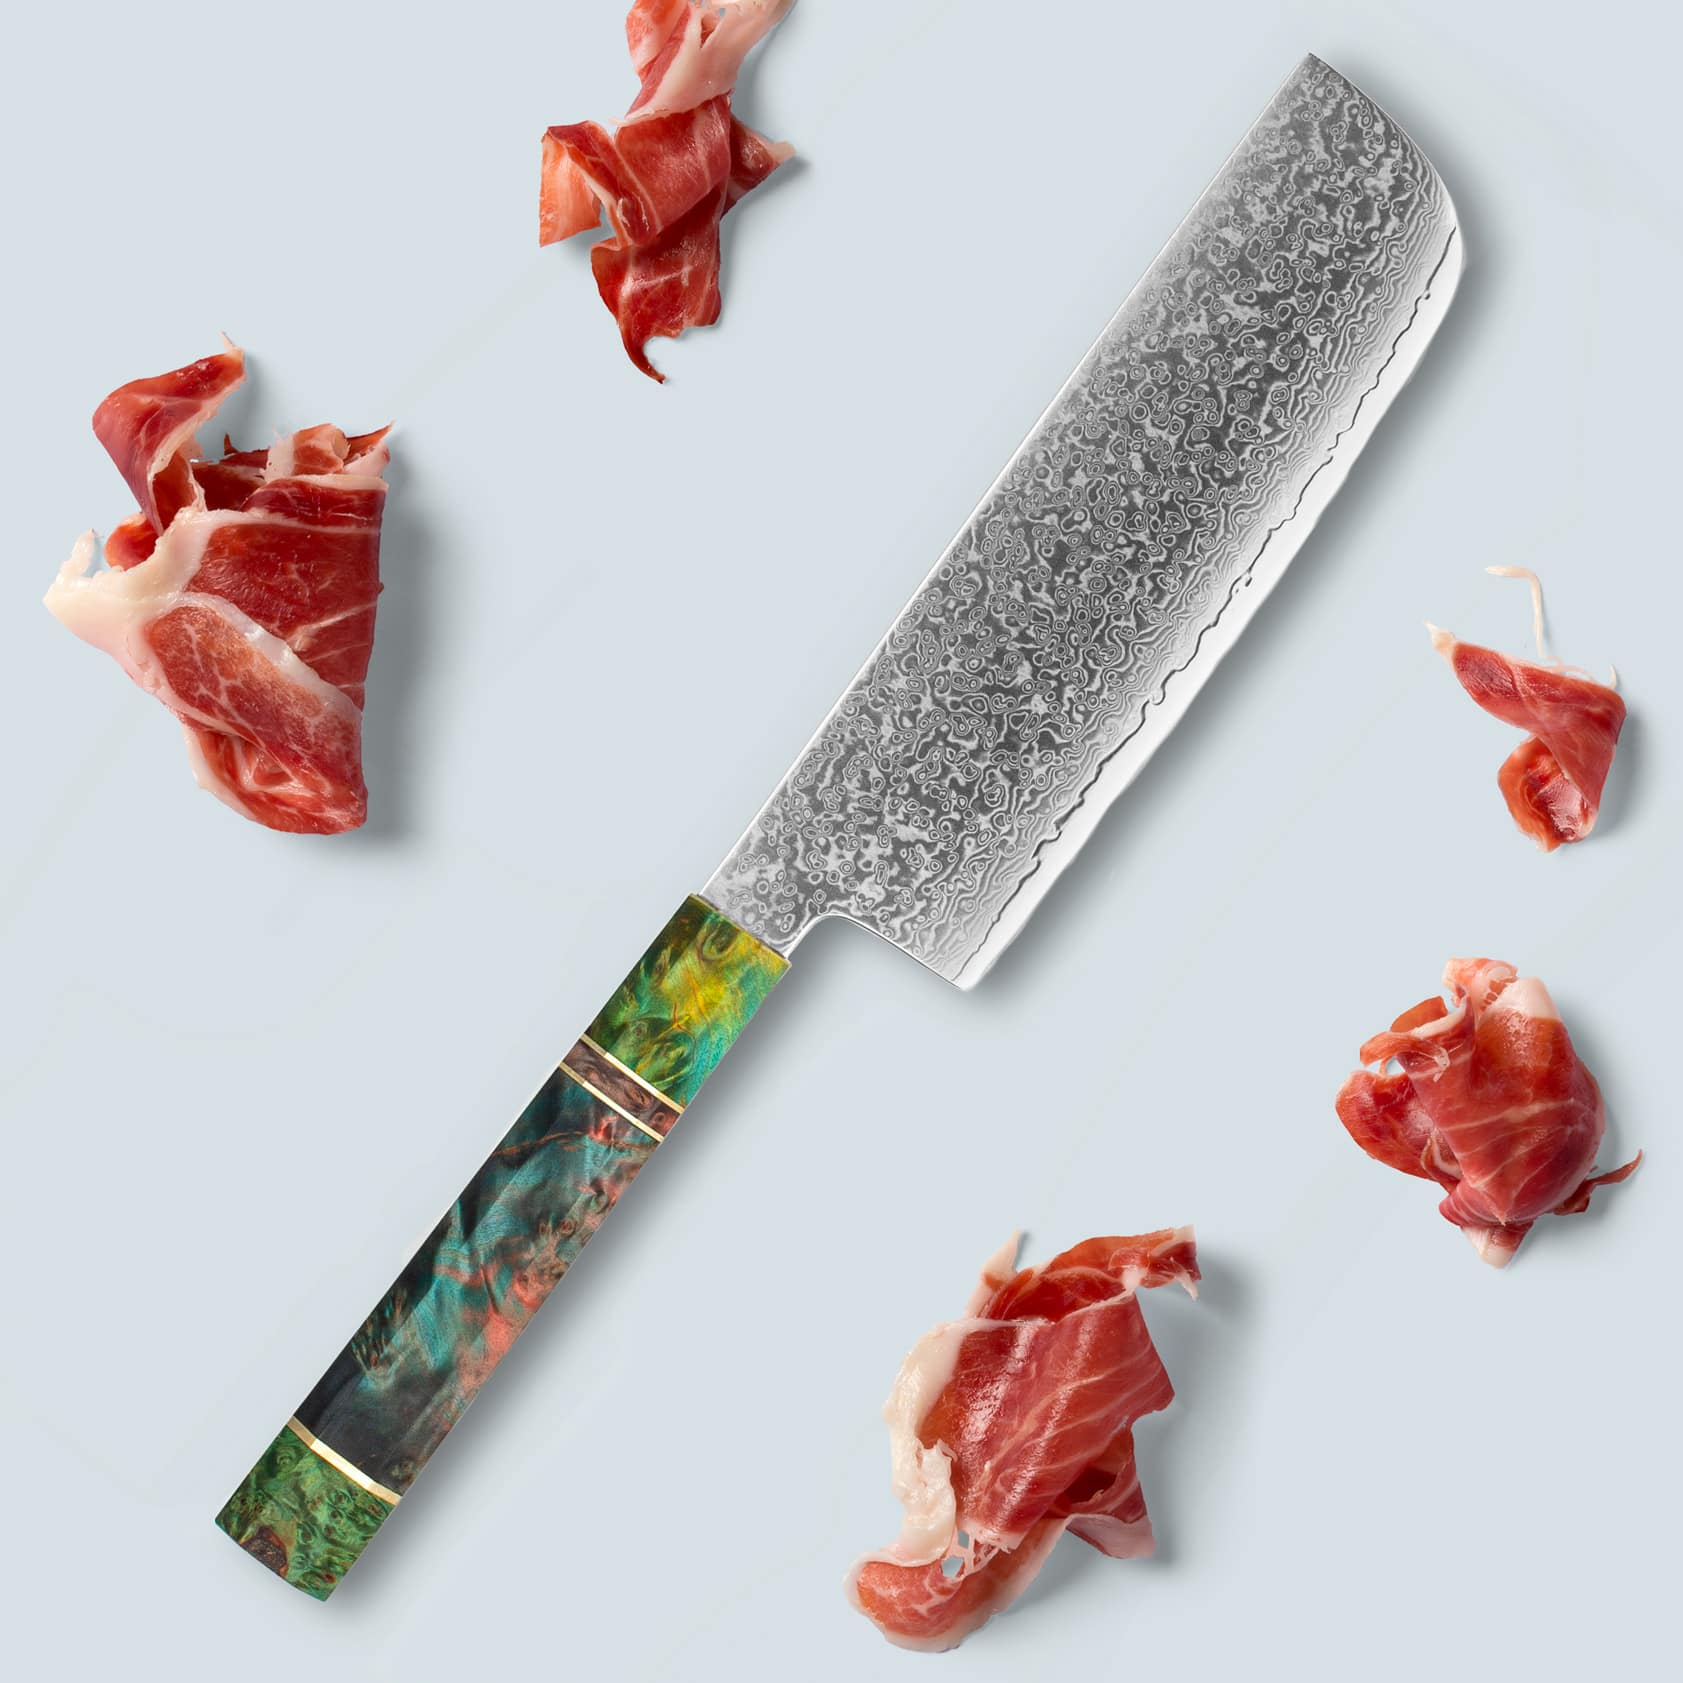 ICHIKA (いち か か) Damasco Knife in acciaio con manico ottagonale colorato